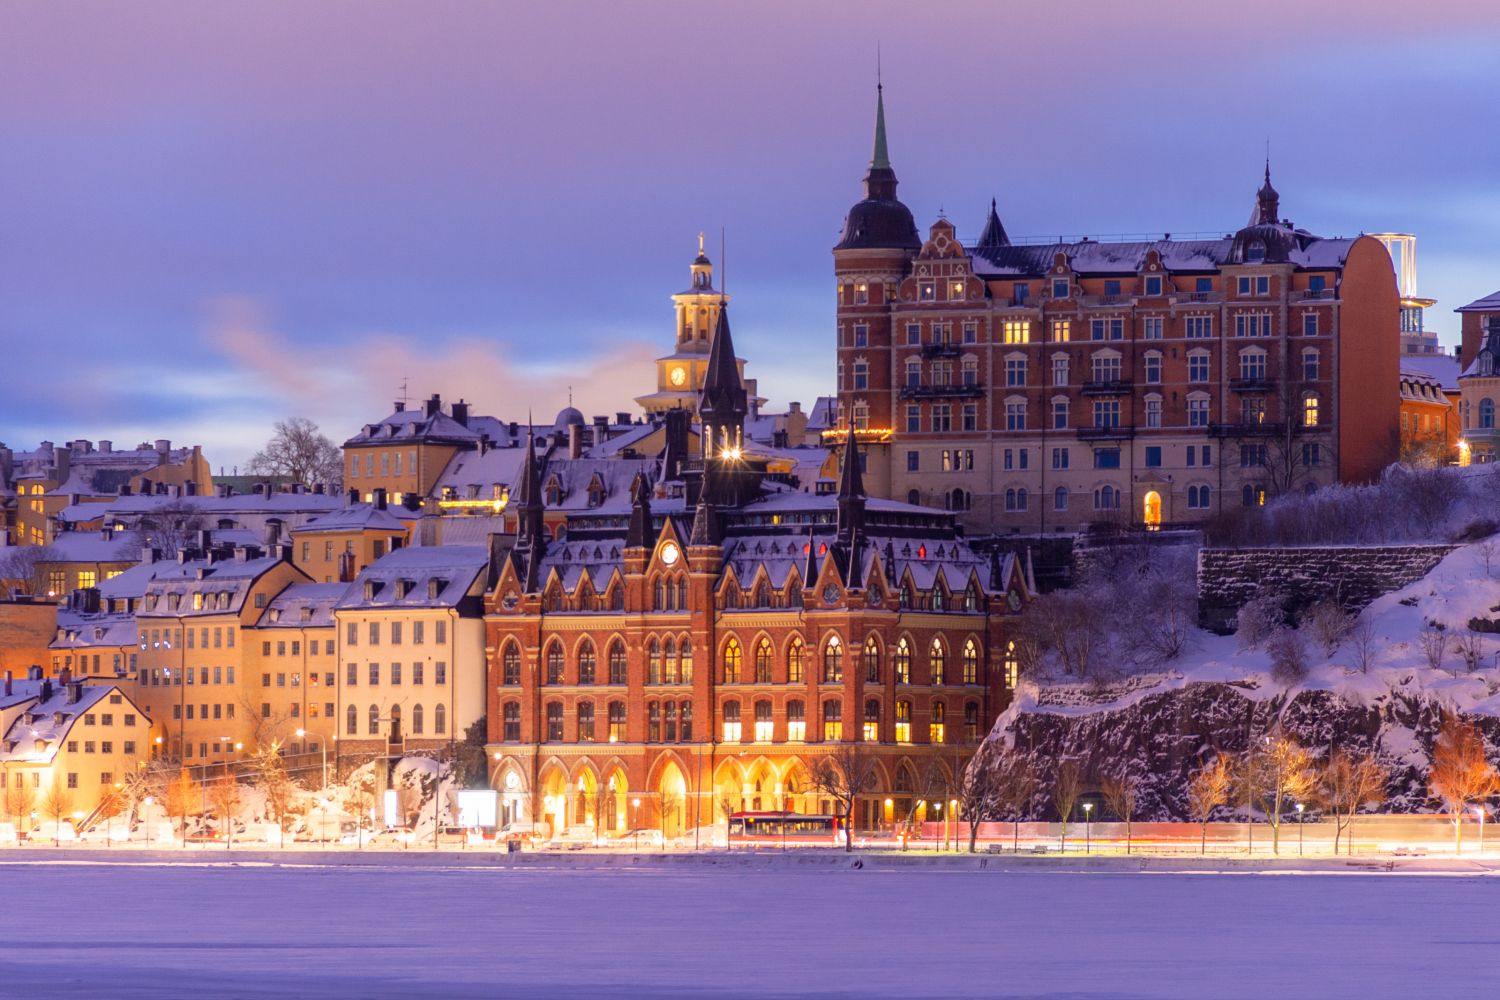 Stockholm, Sweden in the winter.